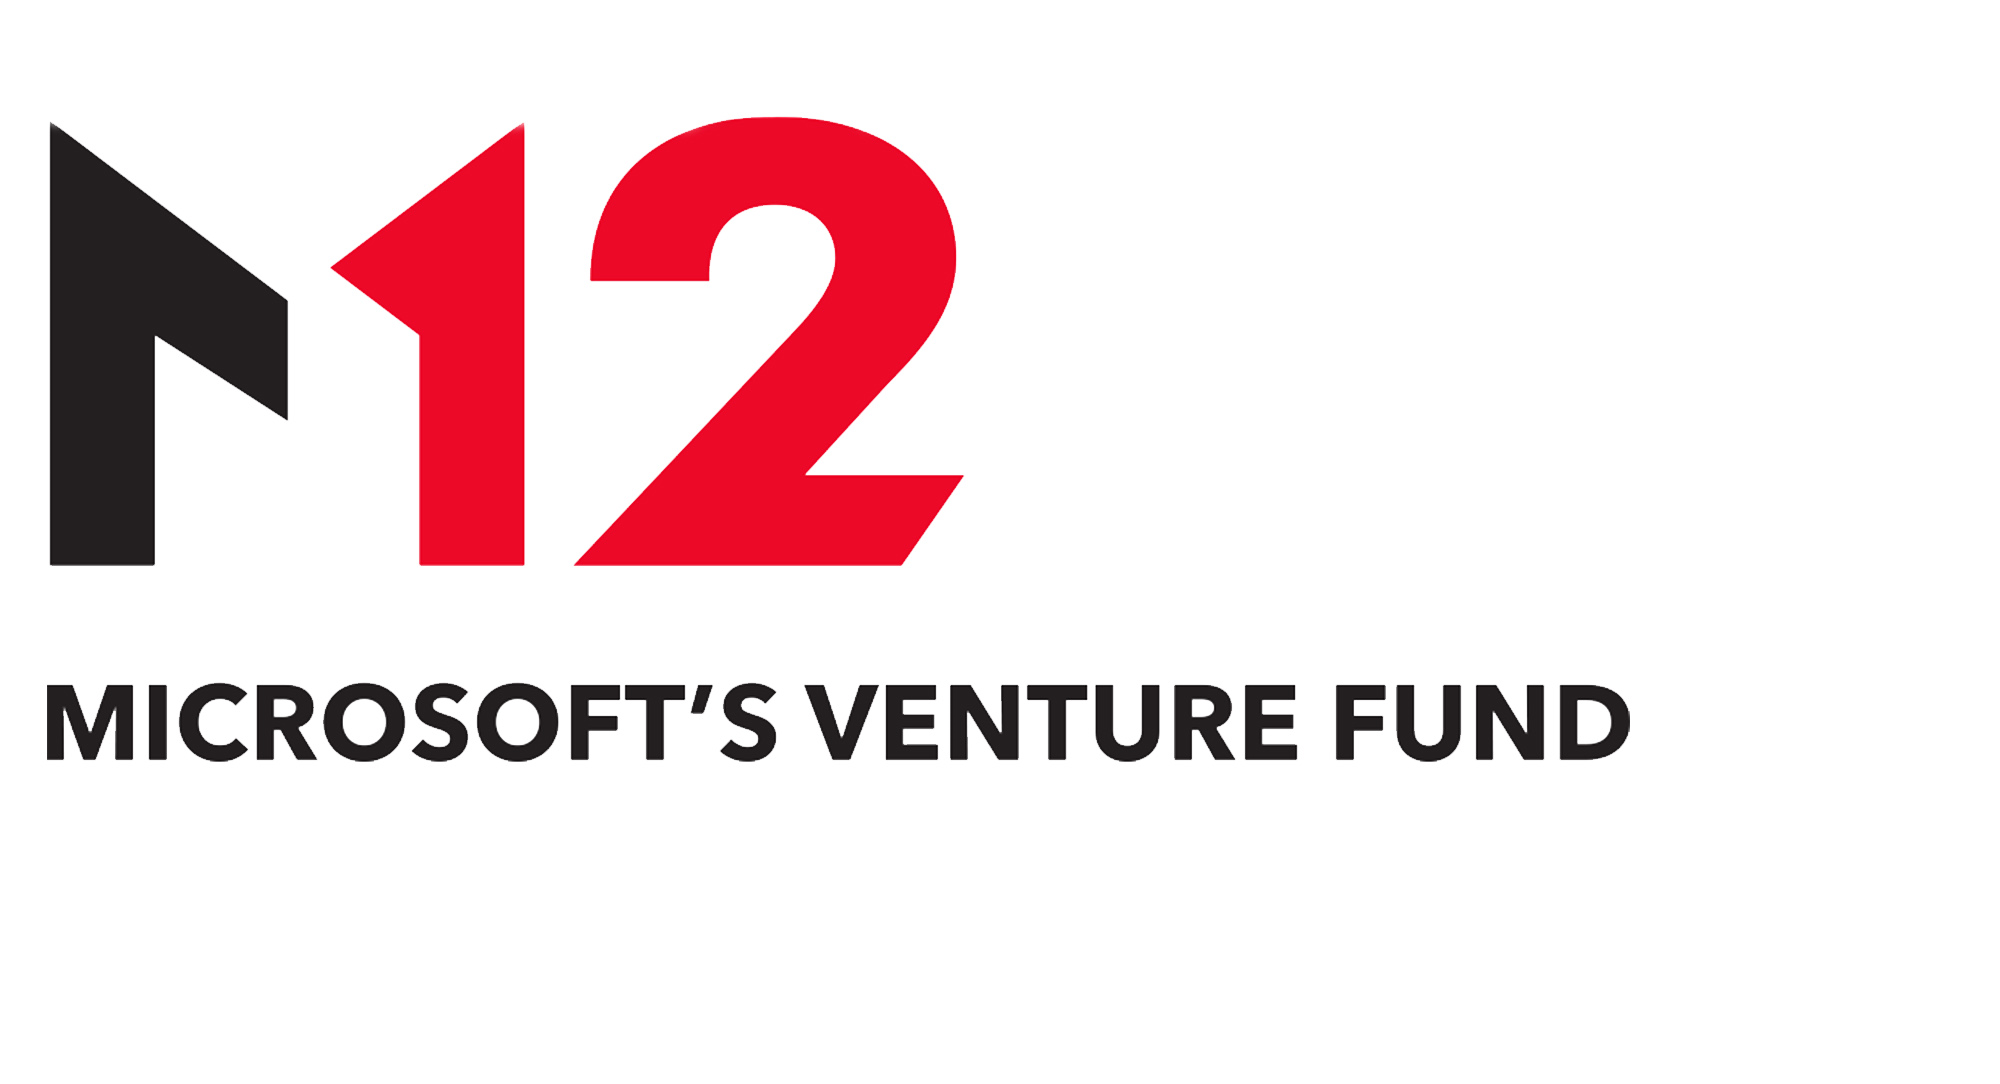 M12 - Microsoft's Venture Fund